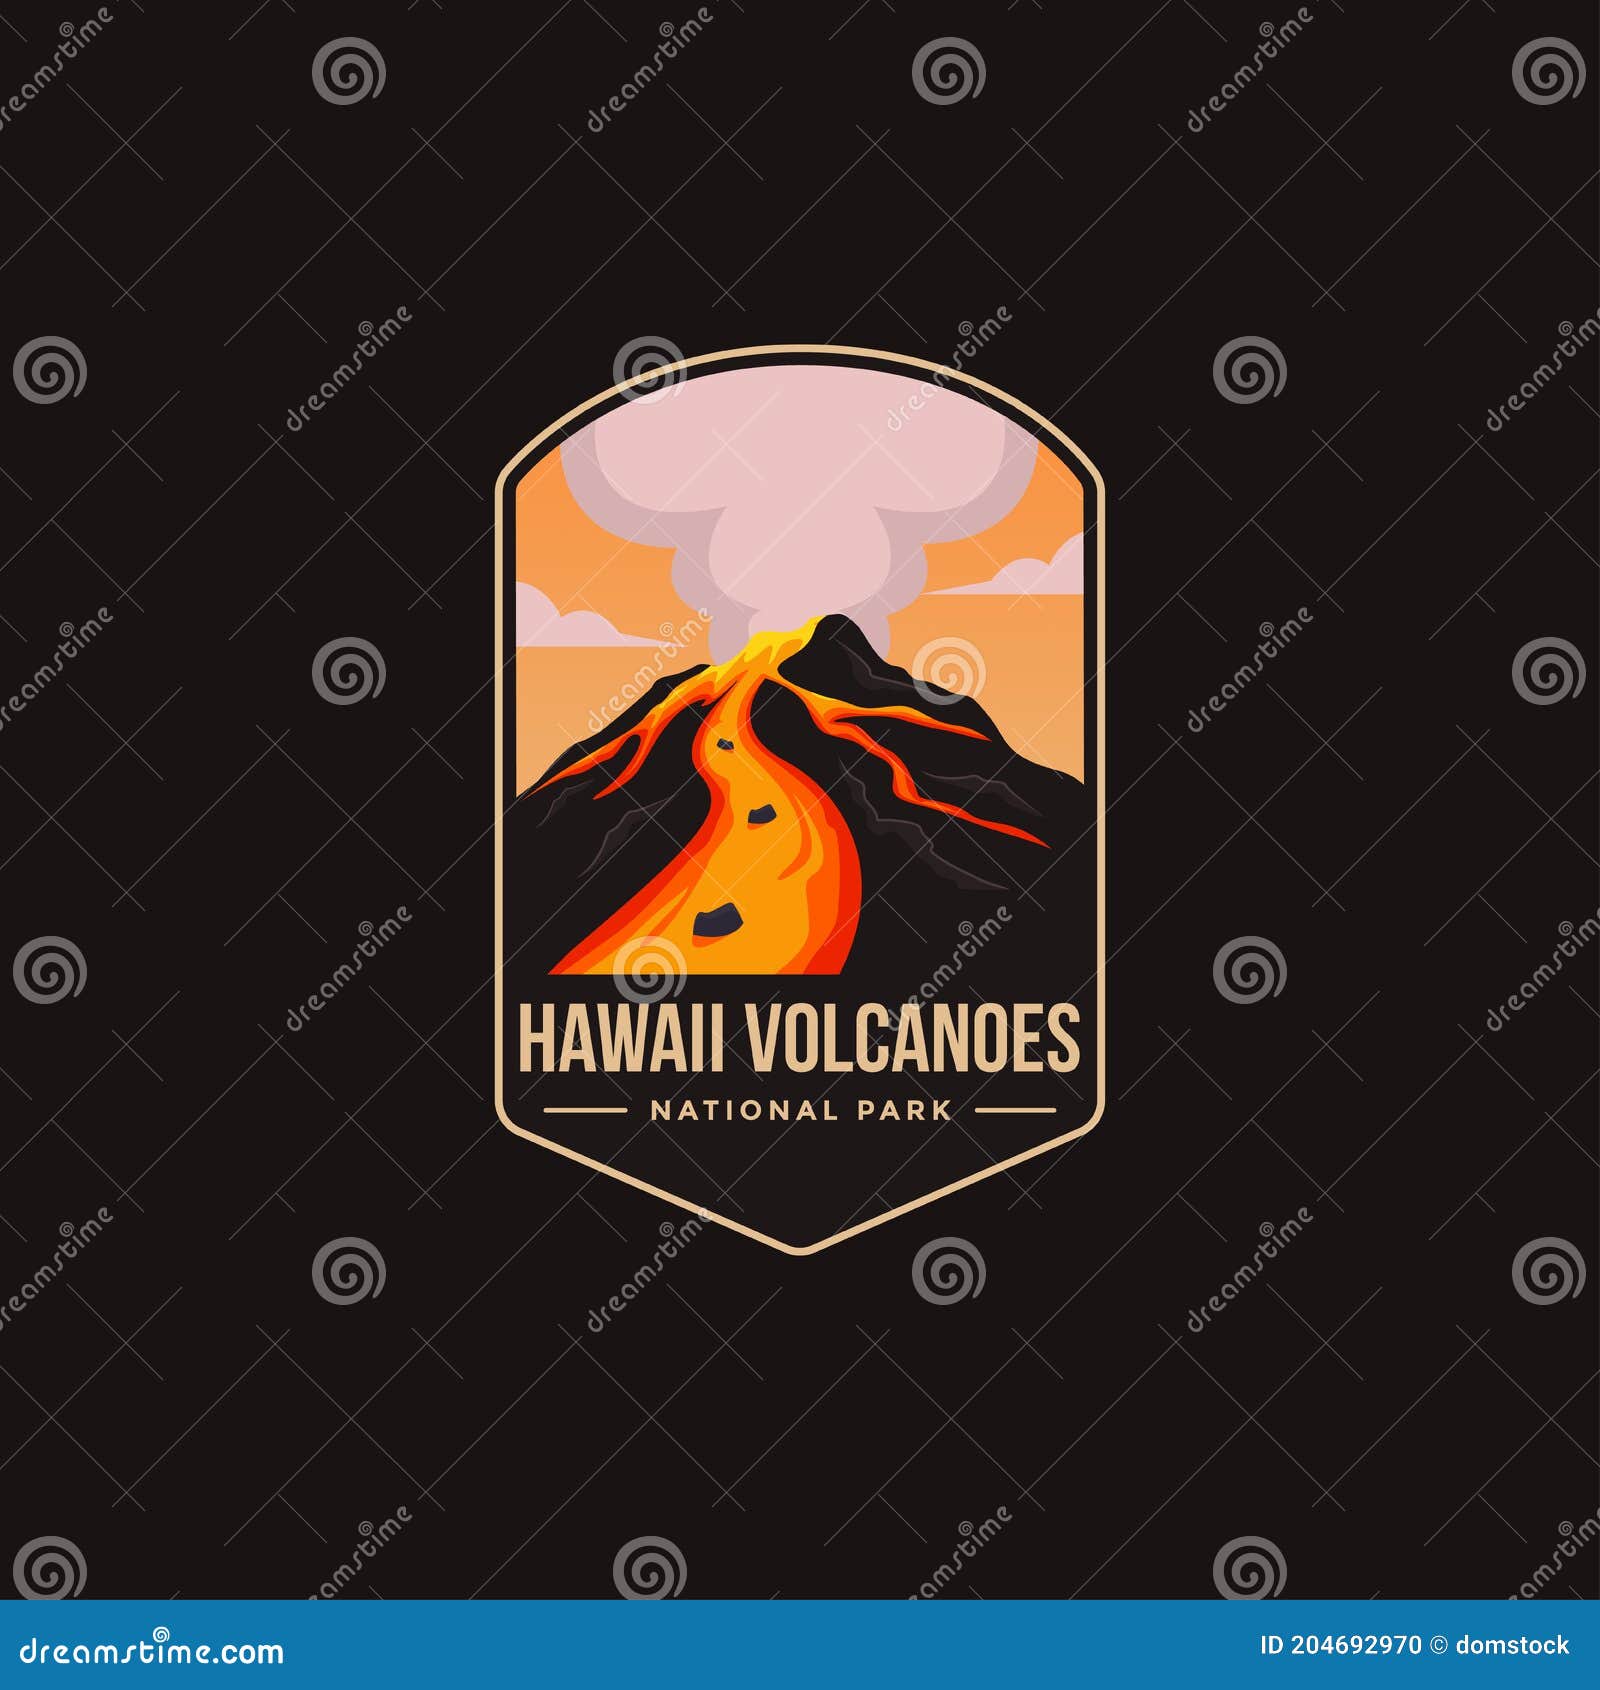 emblem patch logo  of hawaii volcanoes national park